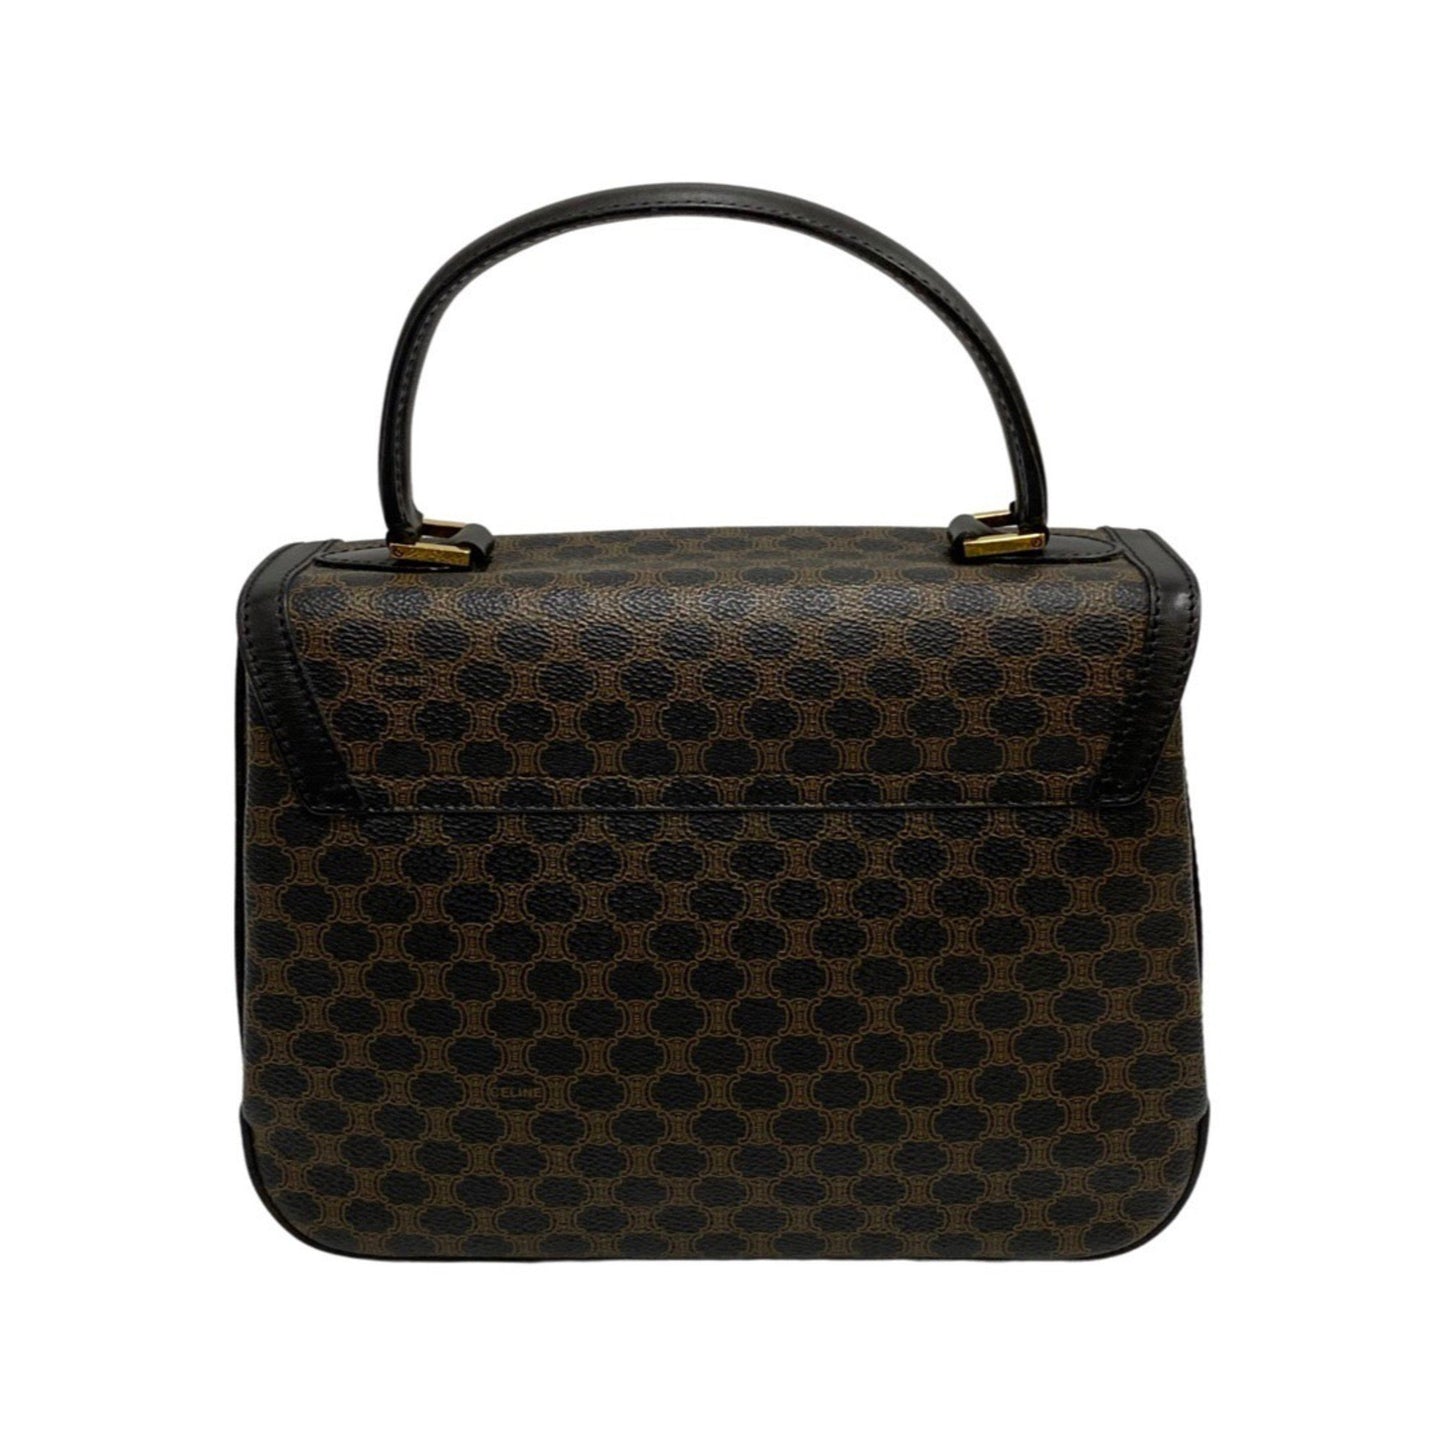 Celine Women's High-Quality Leather Kelly Handbag in Brown